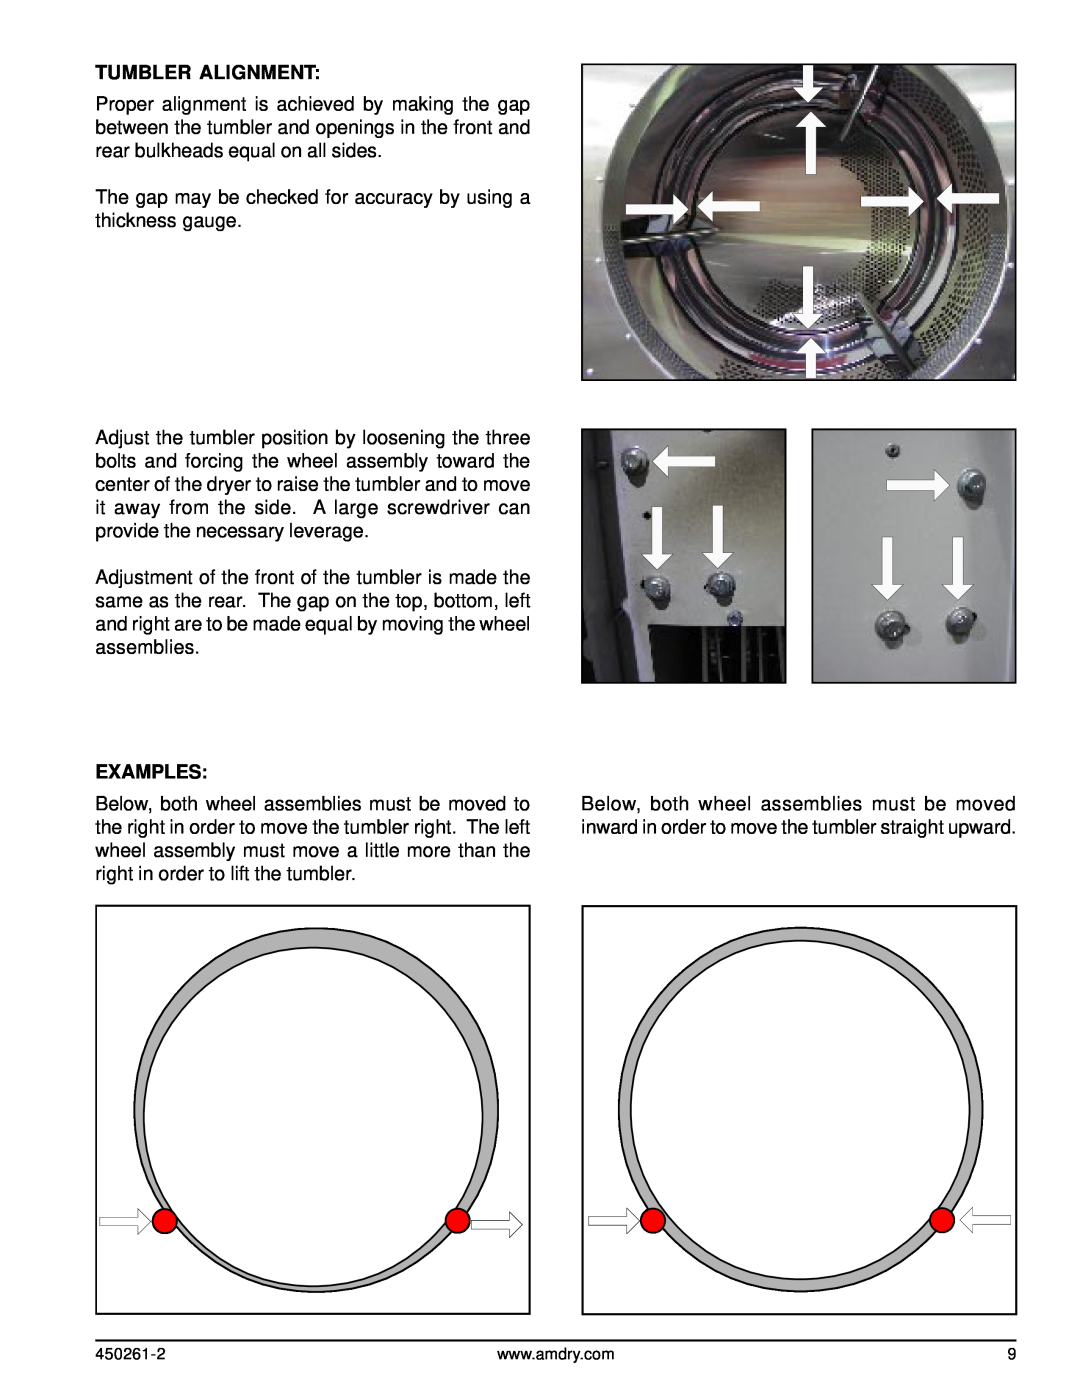 American Dryer Corp AD-20, CG20, D20, SL20, STI-8 manual Tumbler Alignment, Examples 